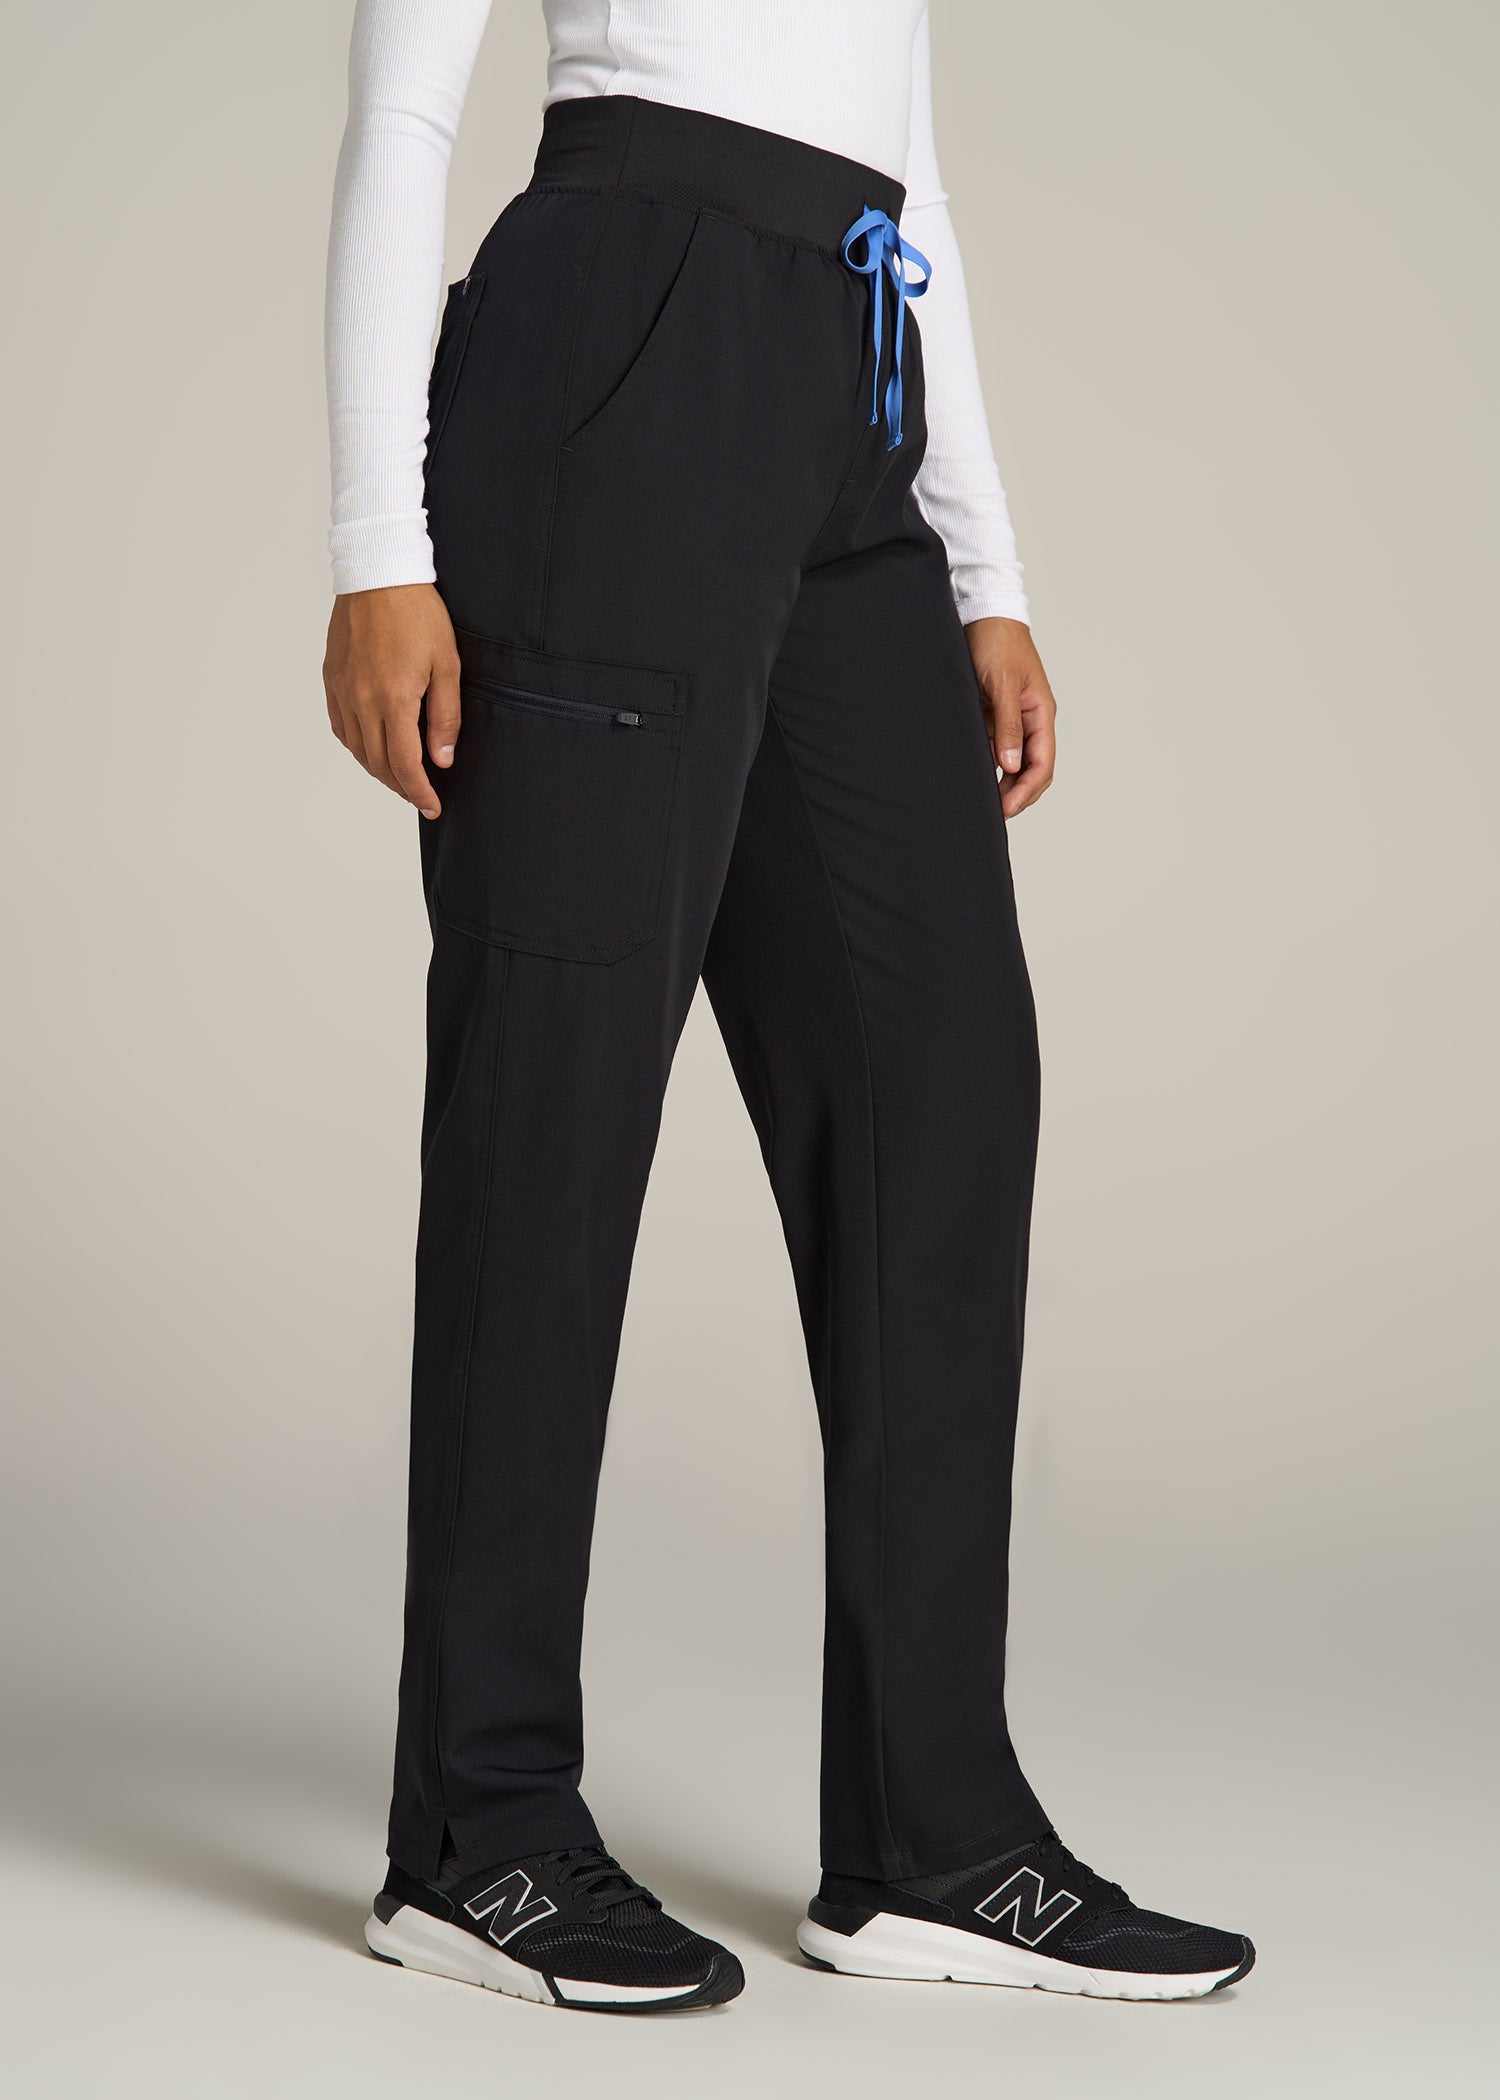 Black Scrub Pants for Men, Made for Performance